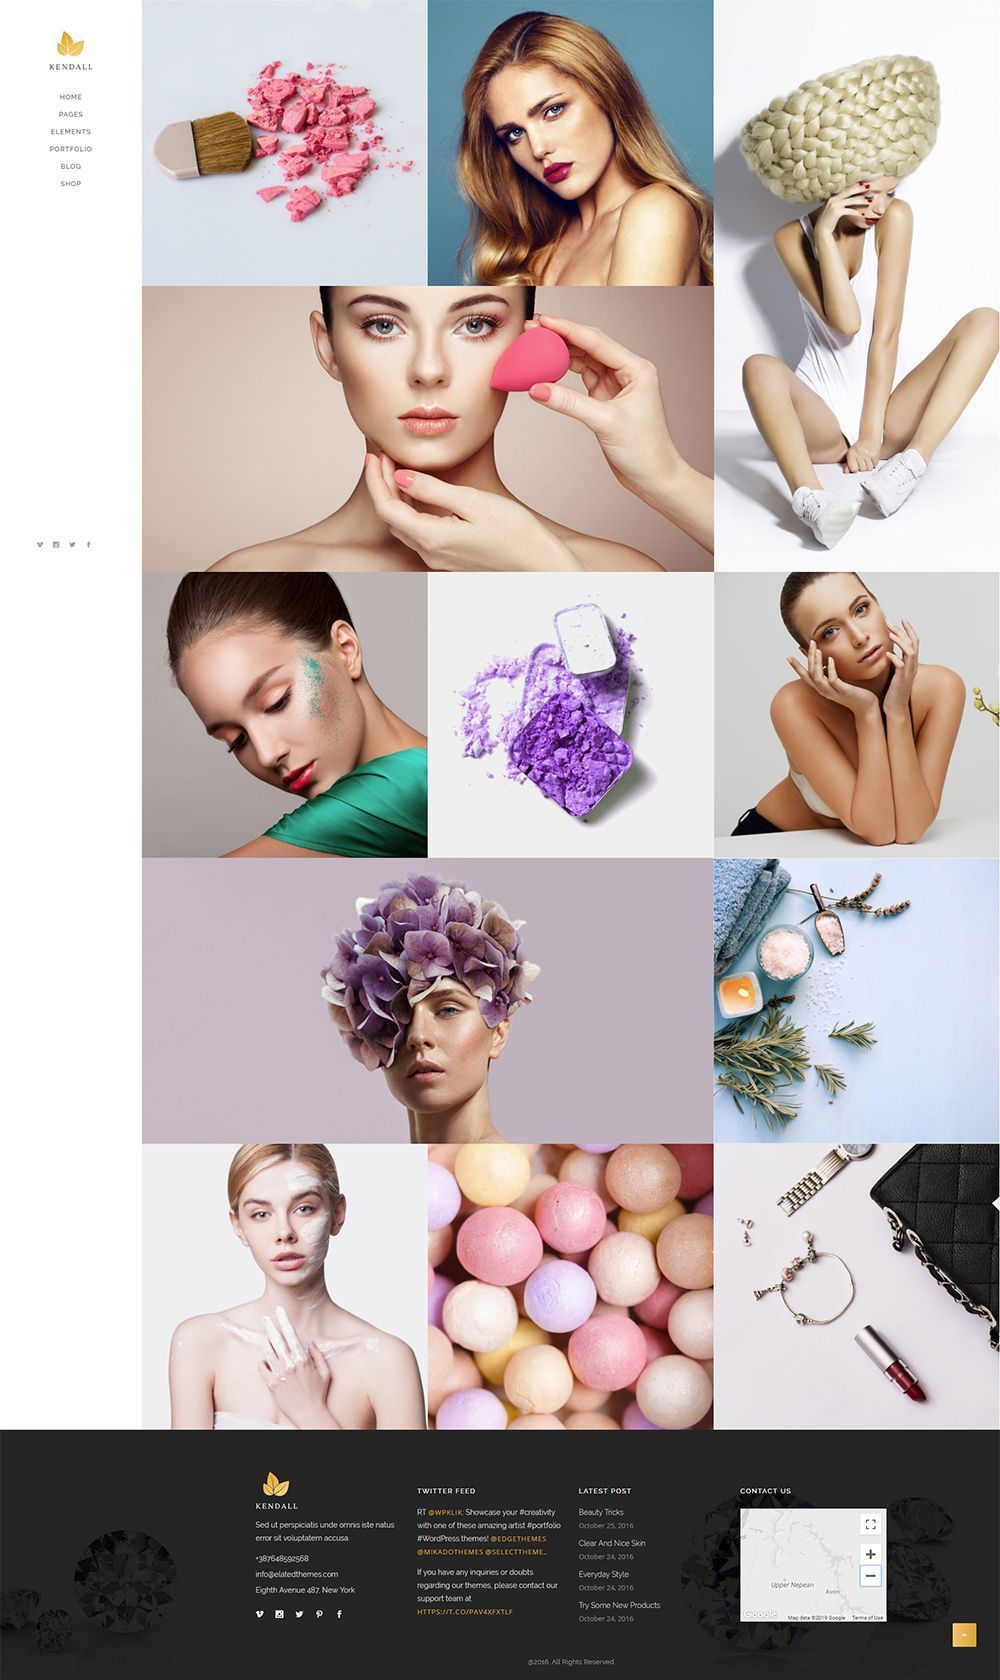 Kendall - Spa, Hair & Beauty Salon Theme - Kendall - Spa, Hair & Beauty Salon Theme -   11 beauty Salon front ideas